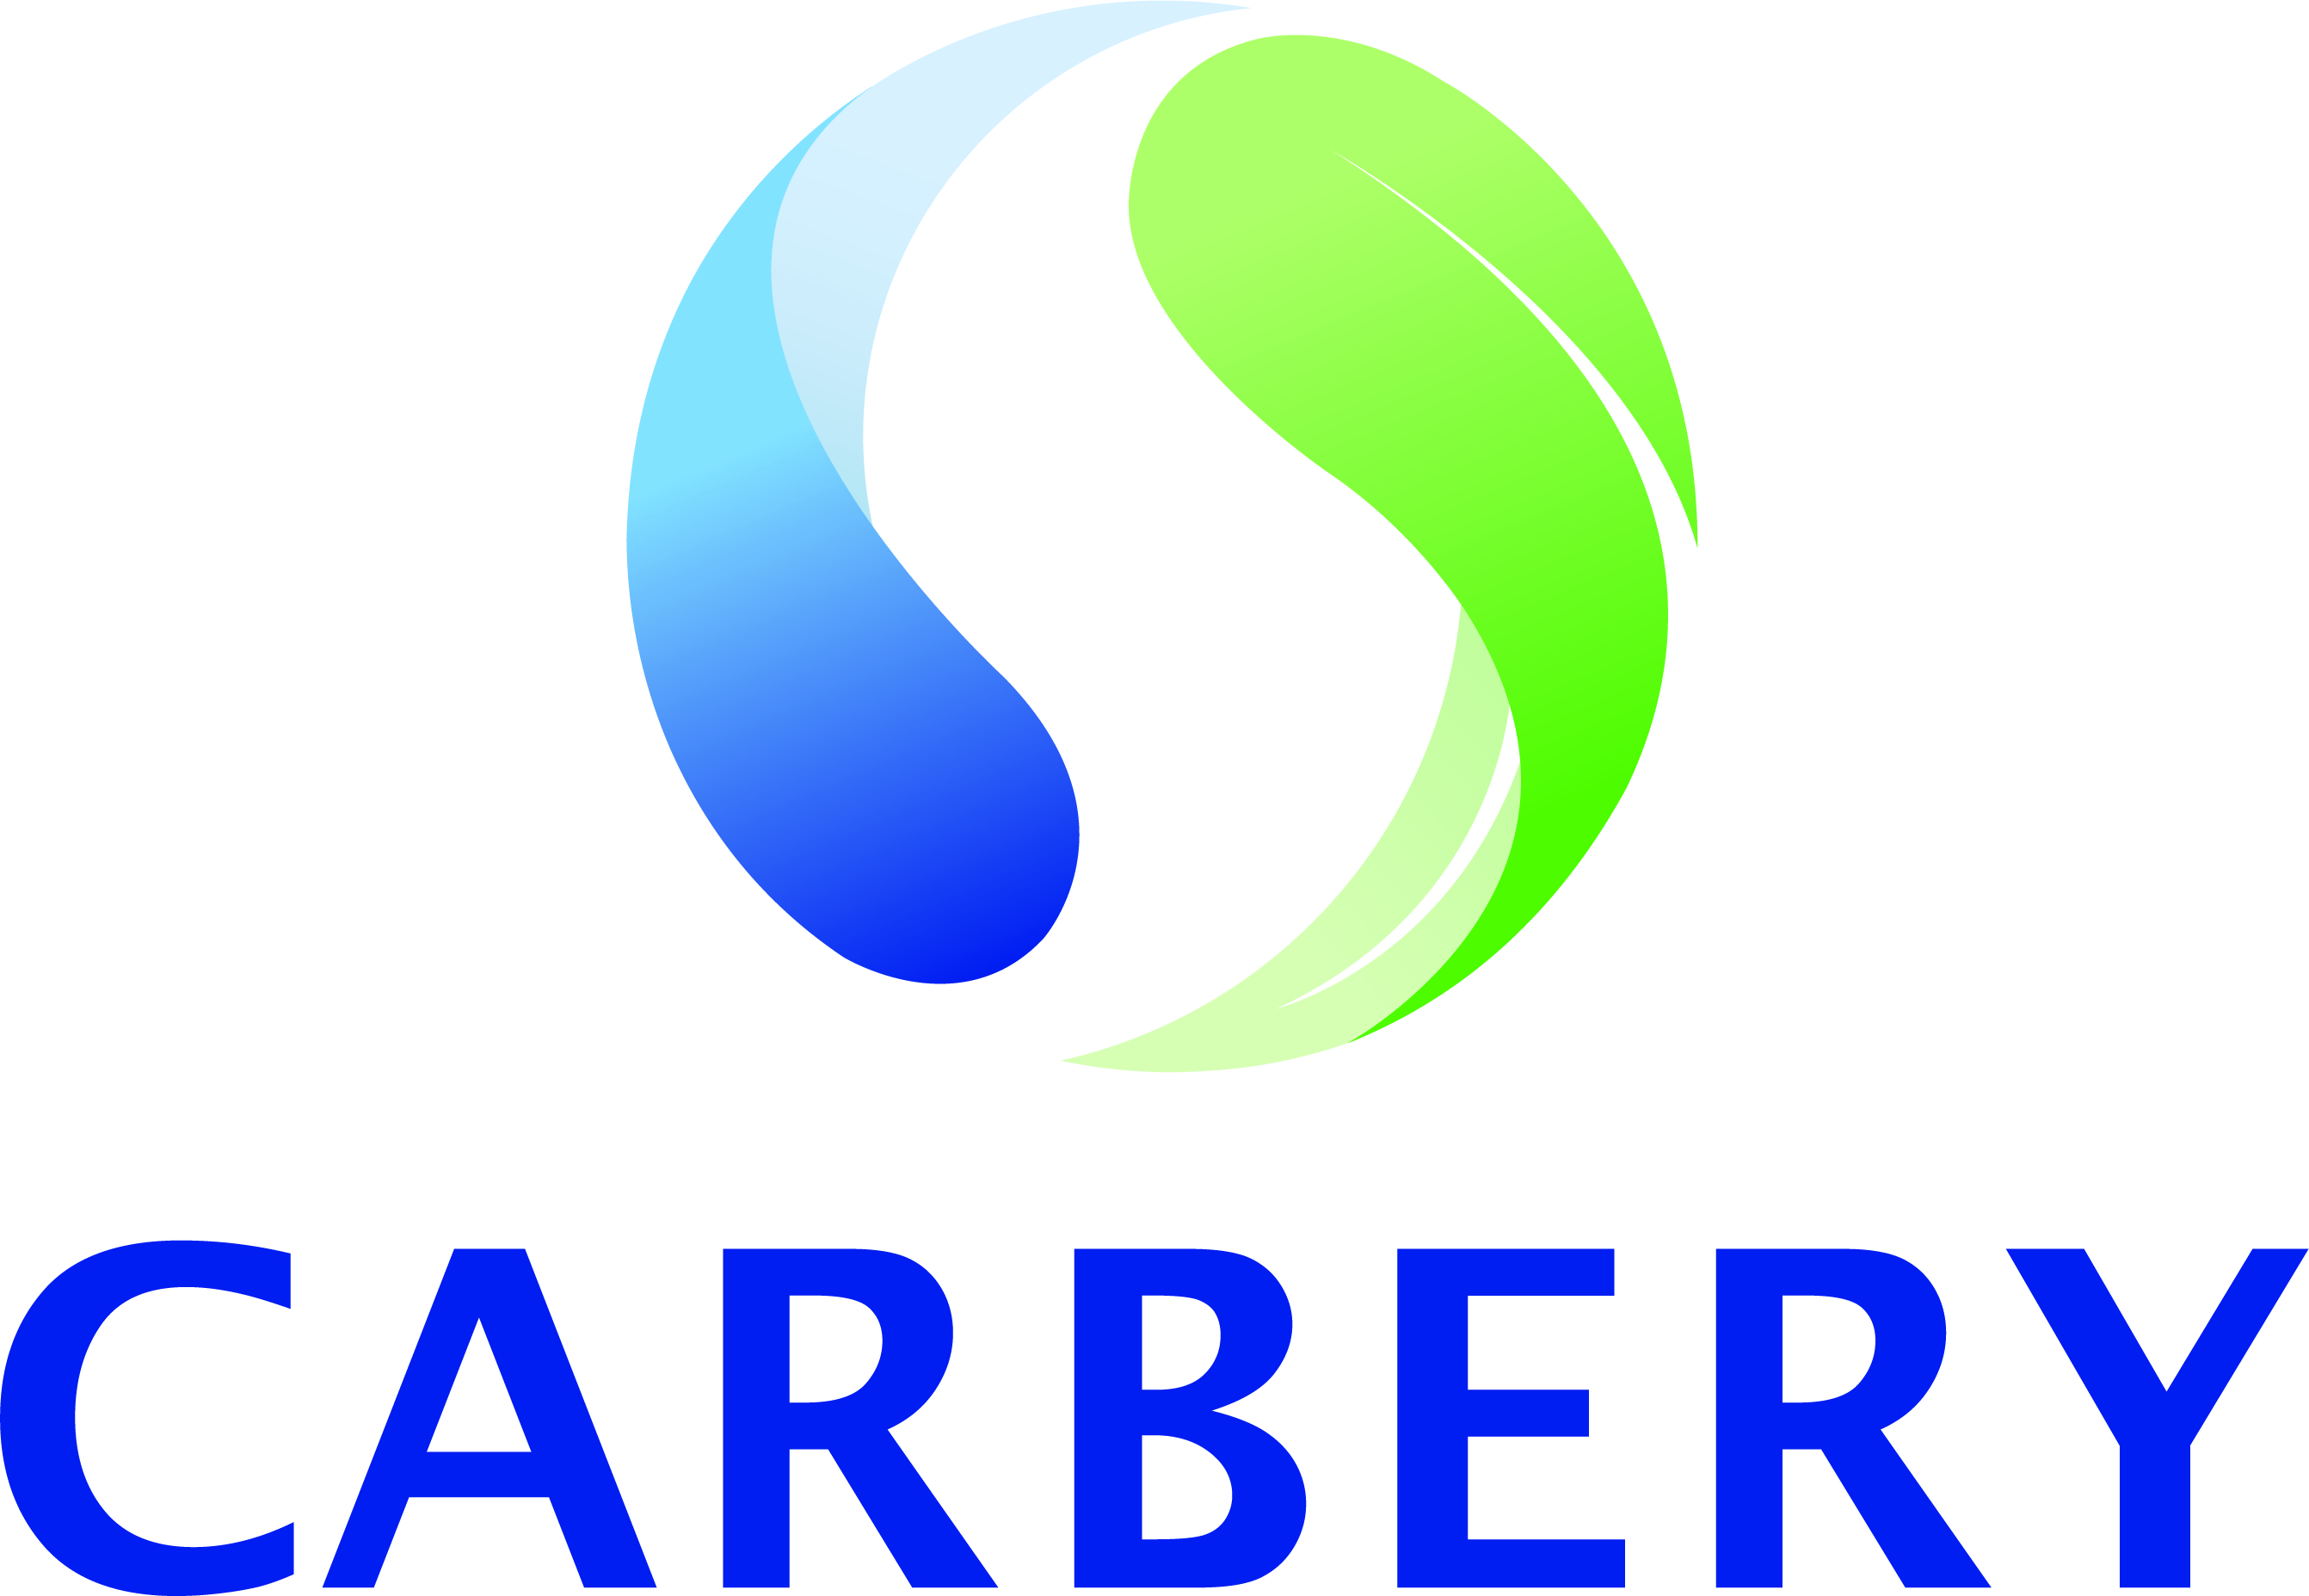 Carbery logotype